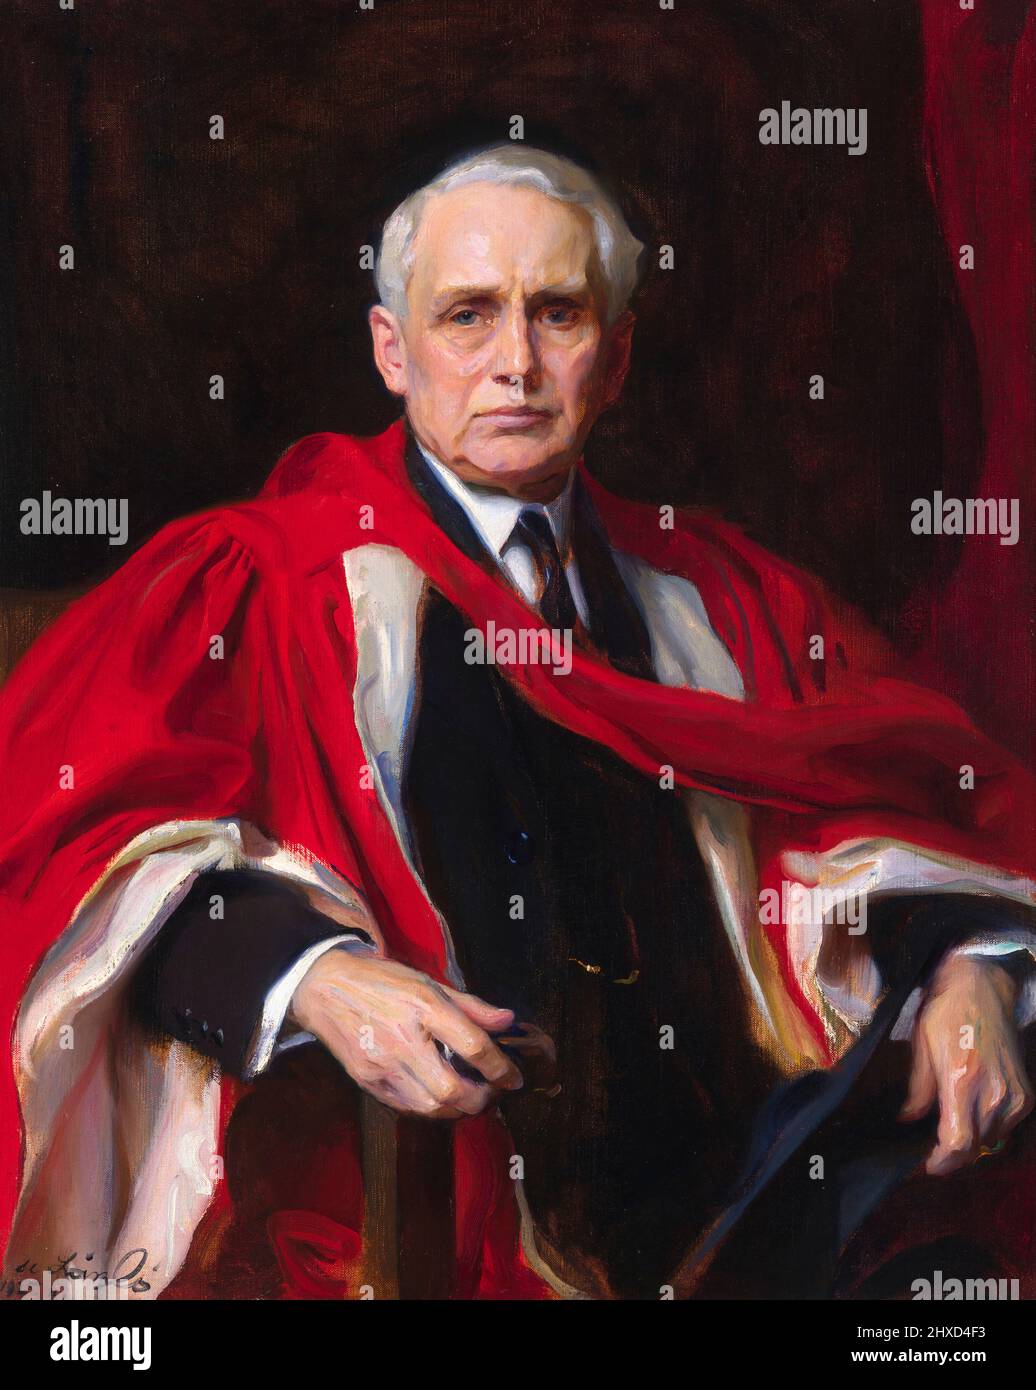 Porträt des ehemaligen US-Außenministers Frank Billings Kellogg (1856-1937) von Philip Alexius de László, Öl auf Leinwand, 1925 Stockfoto